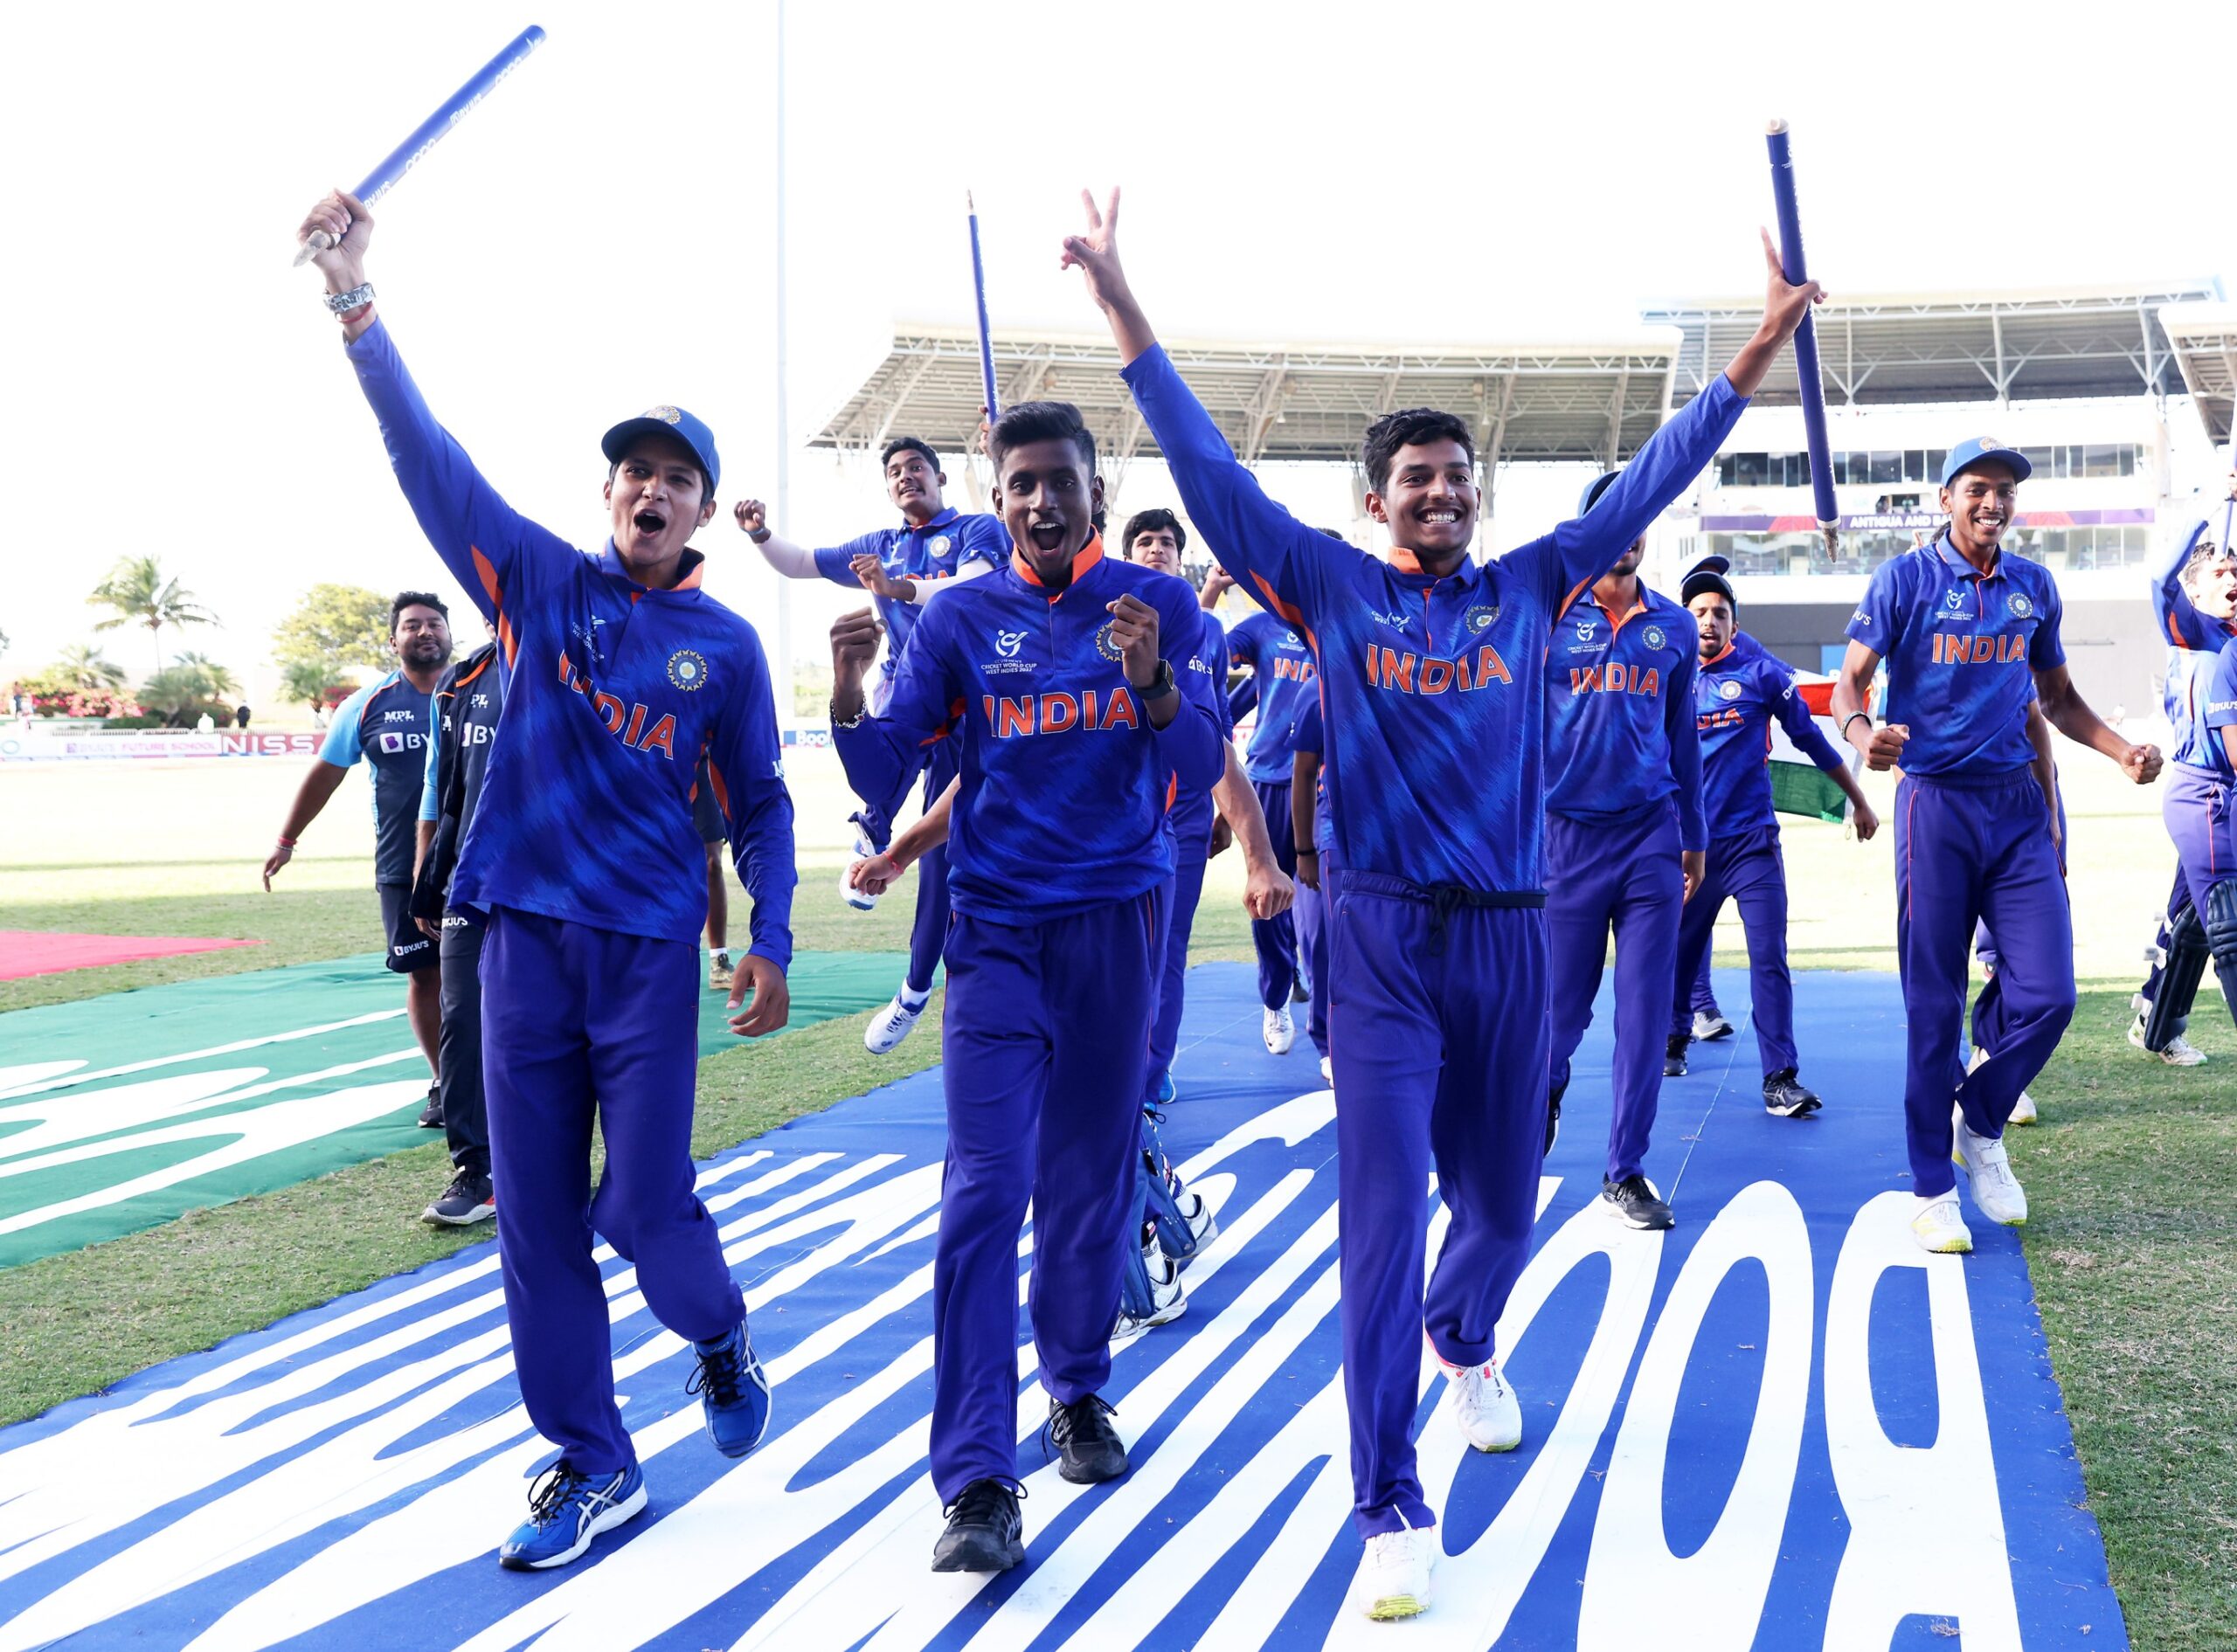  The Rajya Sabha congratulates India’s U-19 squad on their World Cup victory.